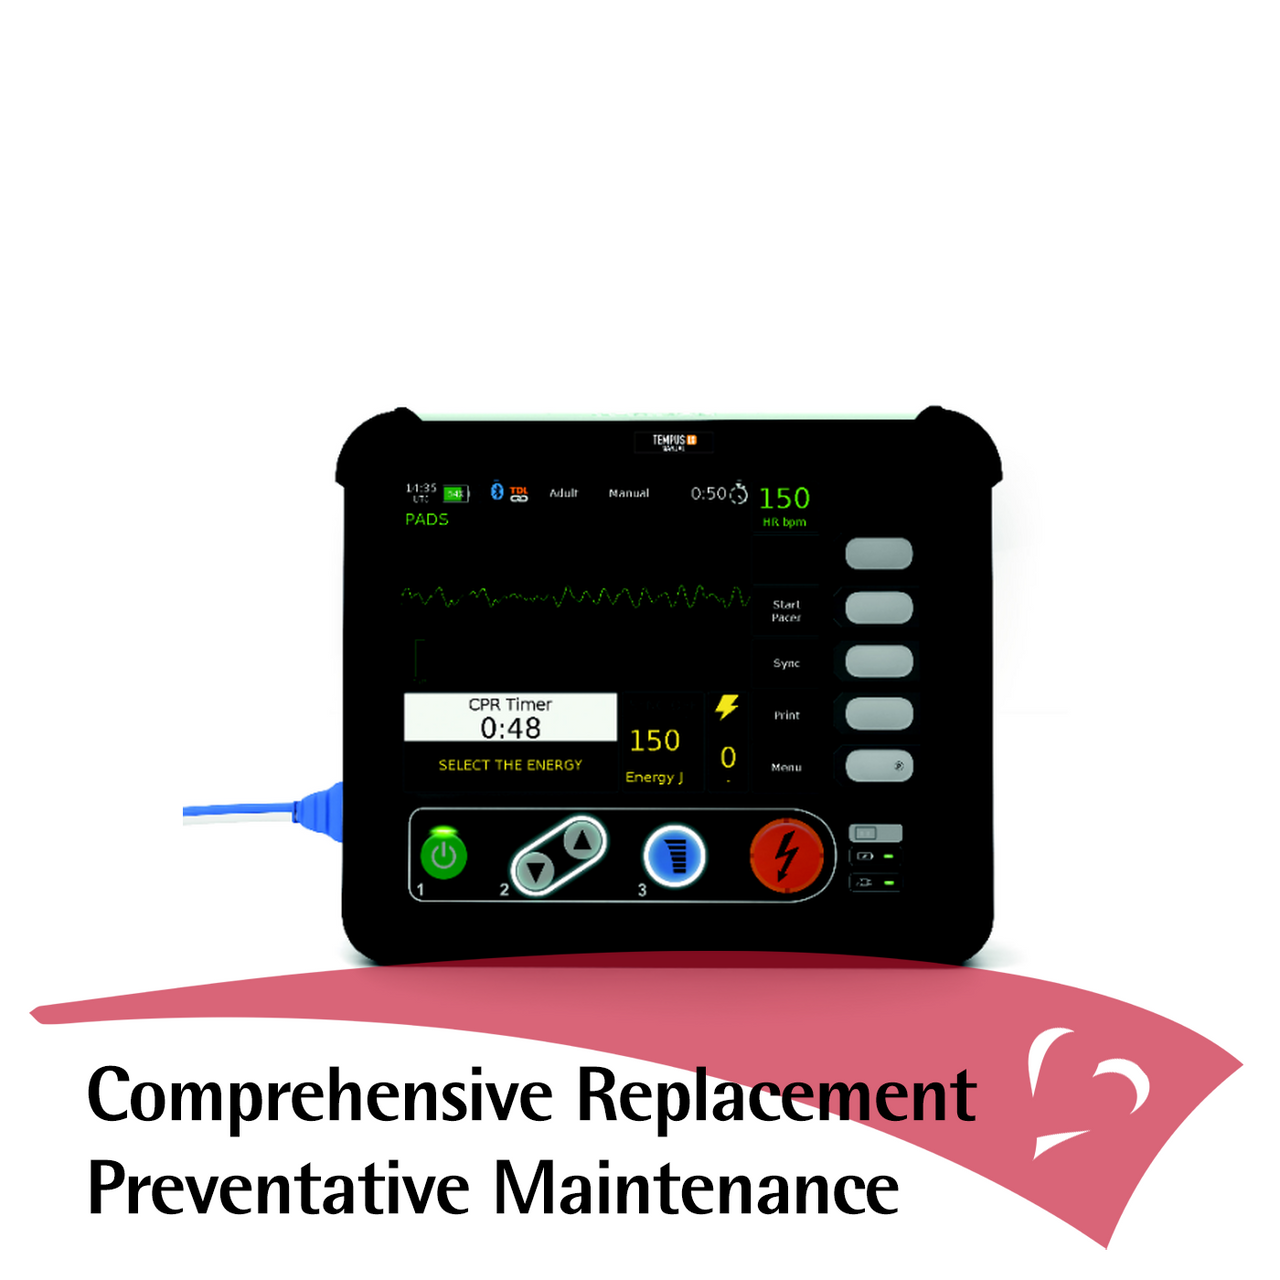 Preventative Maintenance, Service, Repair for Philips MRx, Zoll M, Zoll X,  Lifepak 15, Lifepak 12, Medical Equipment